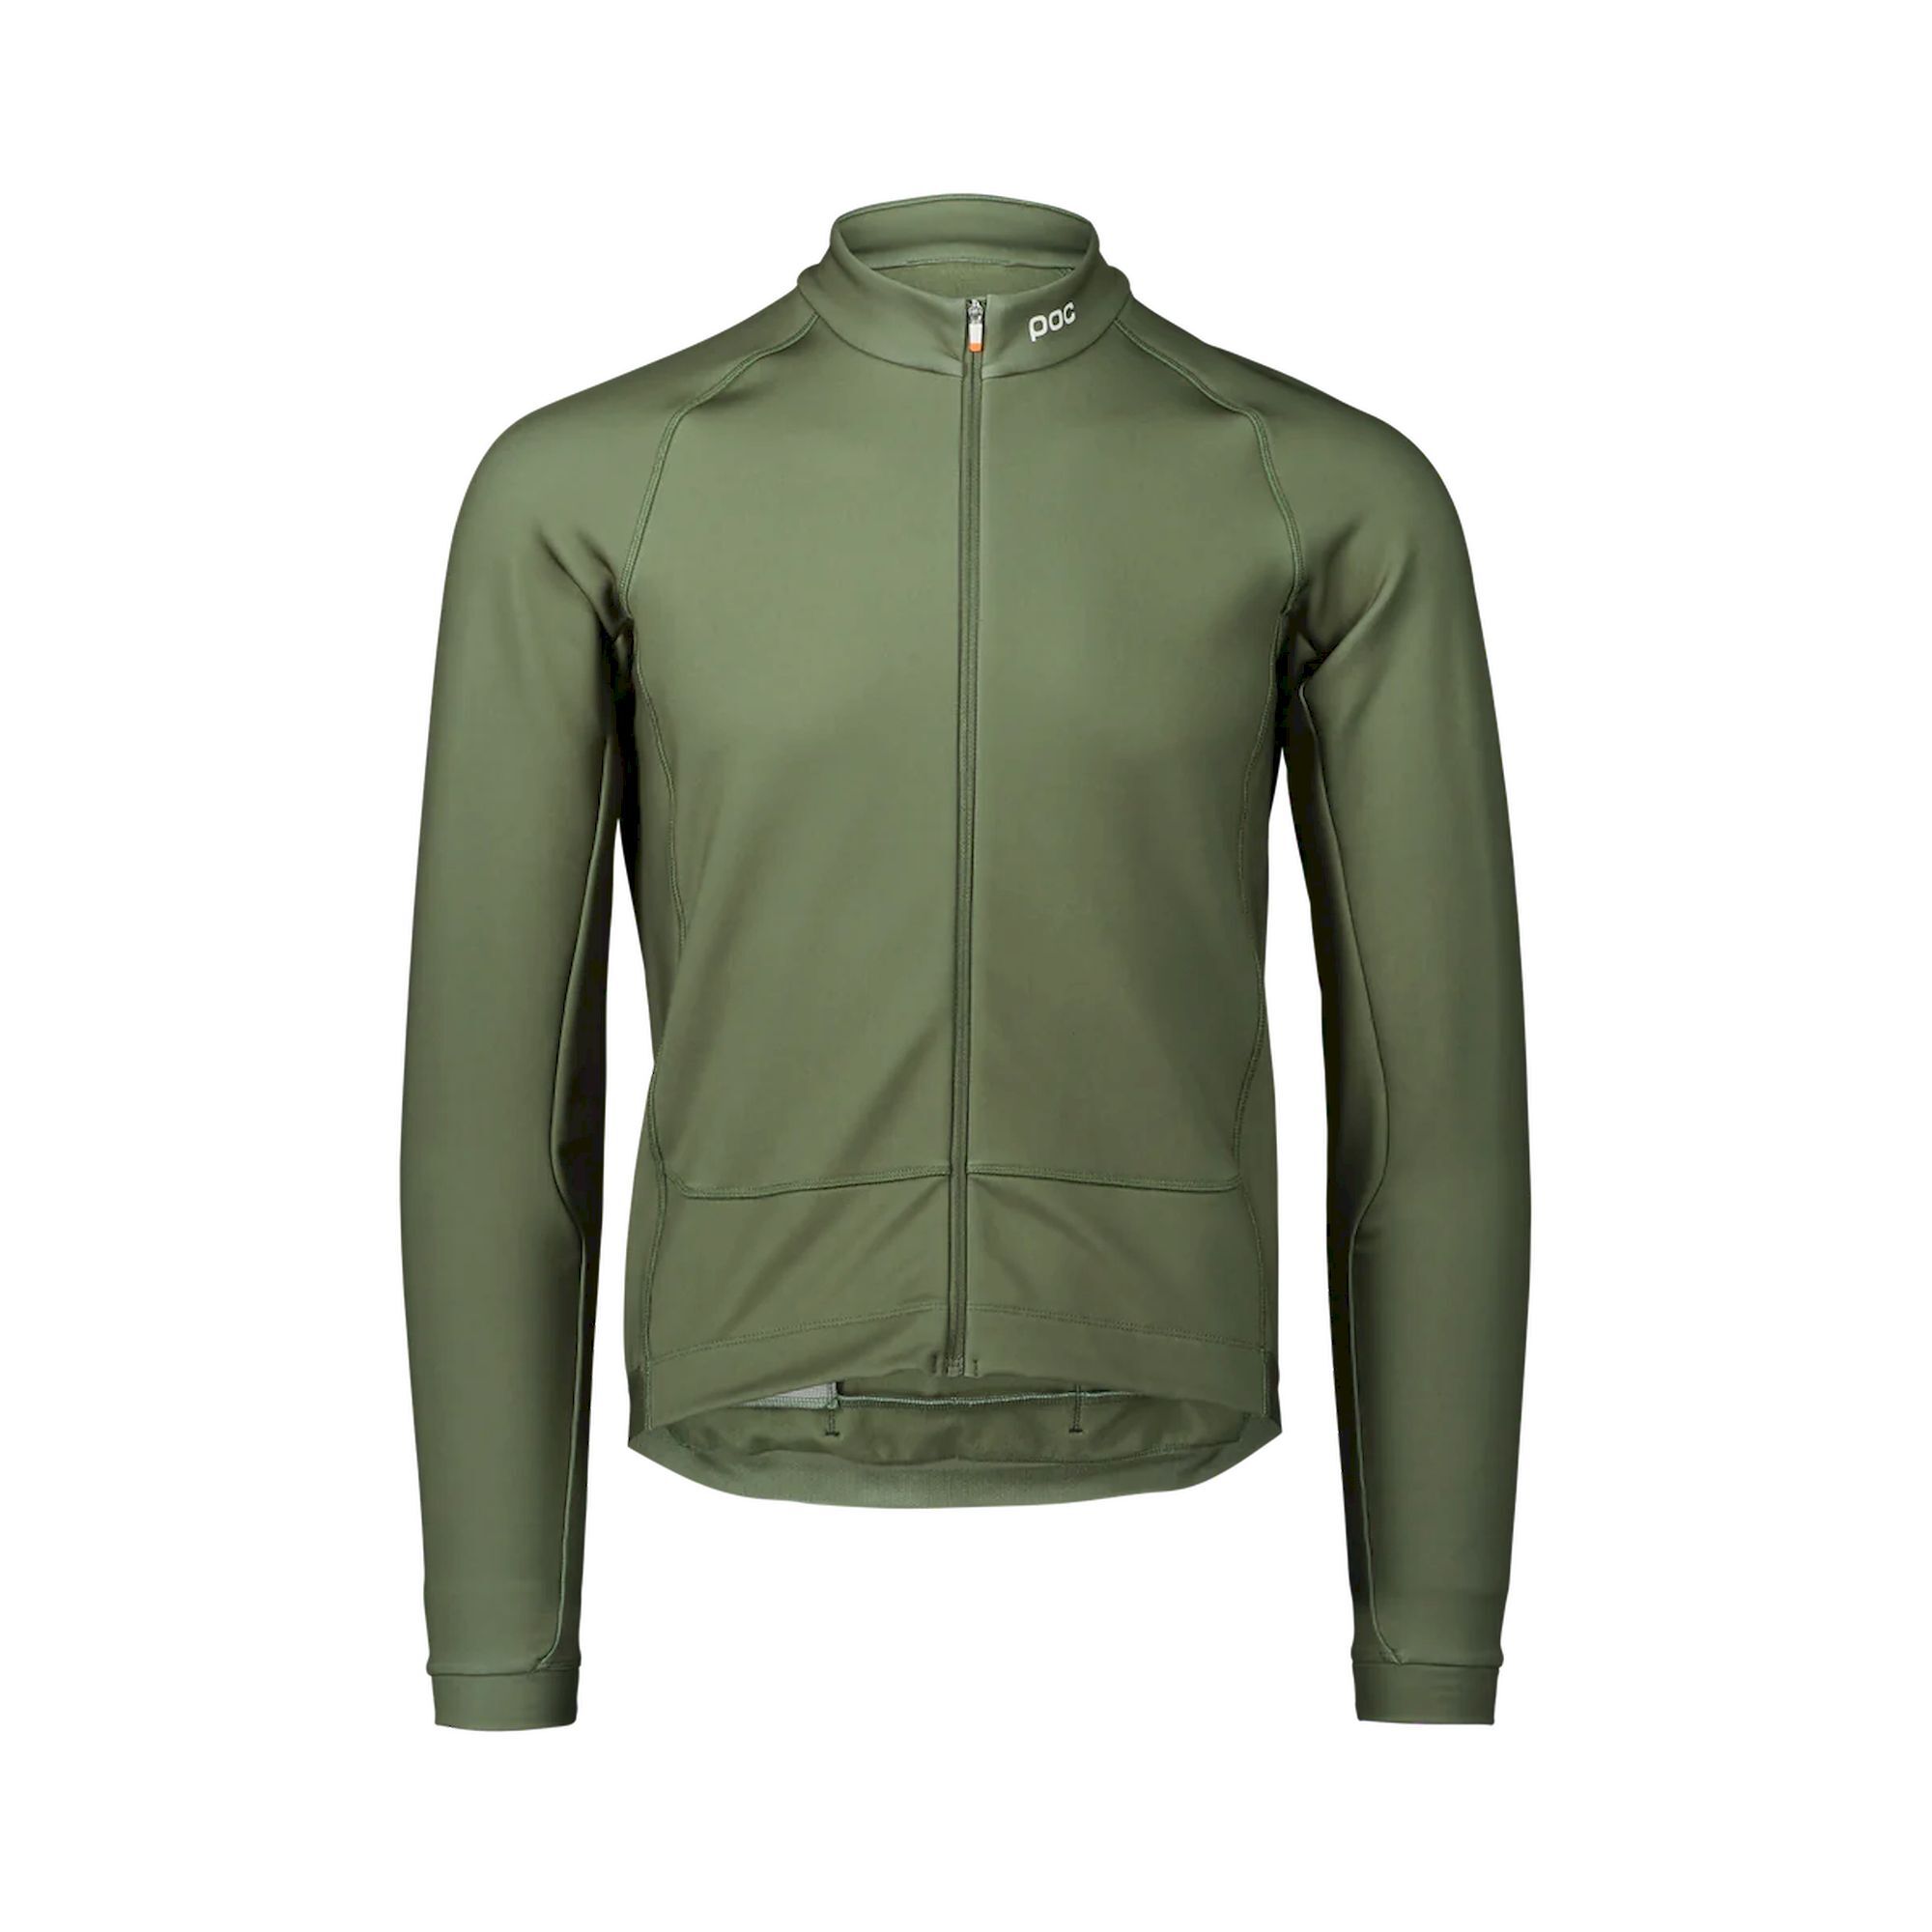 Poc Thermal Jacket - Cycling jacket - Men's